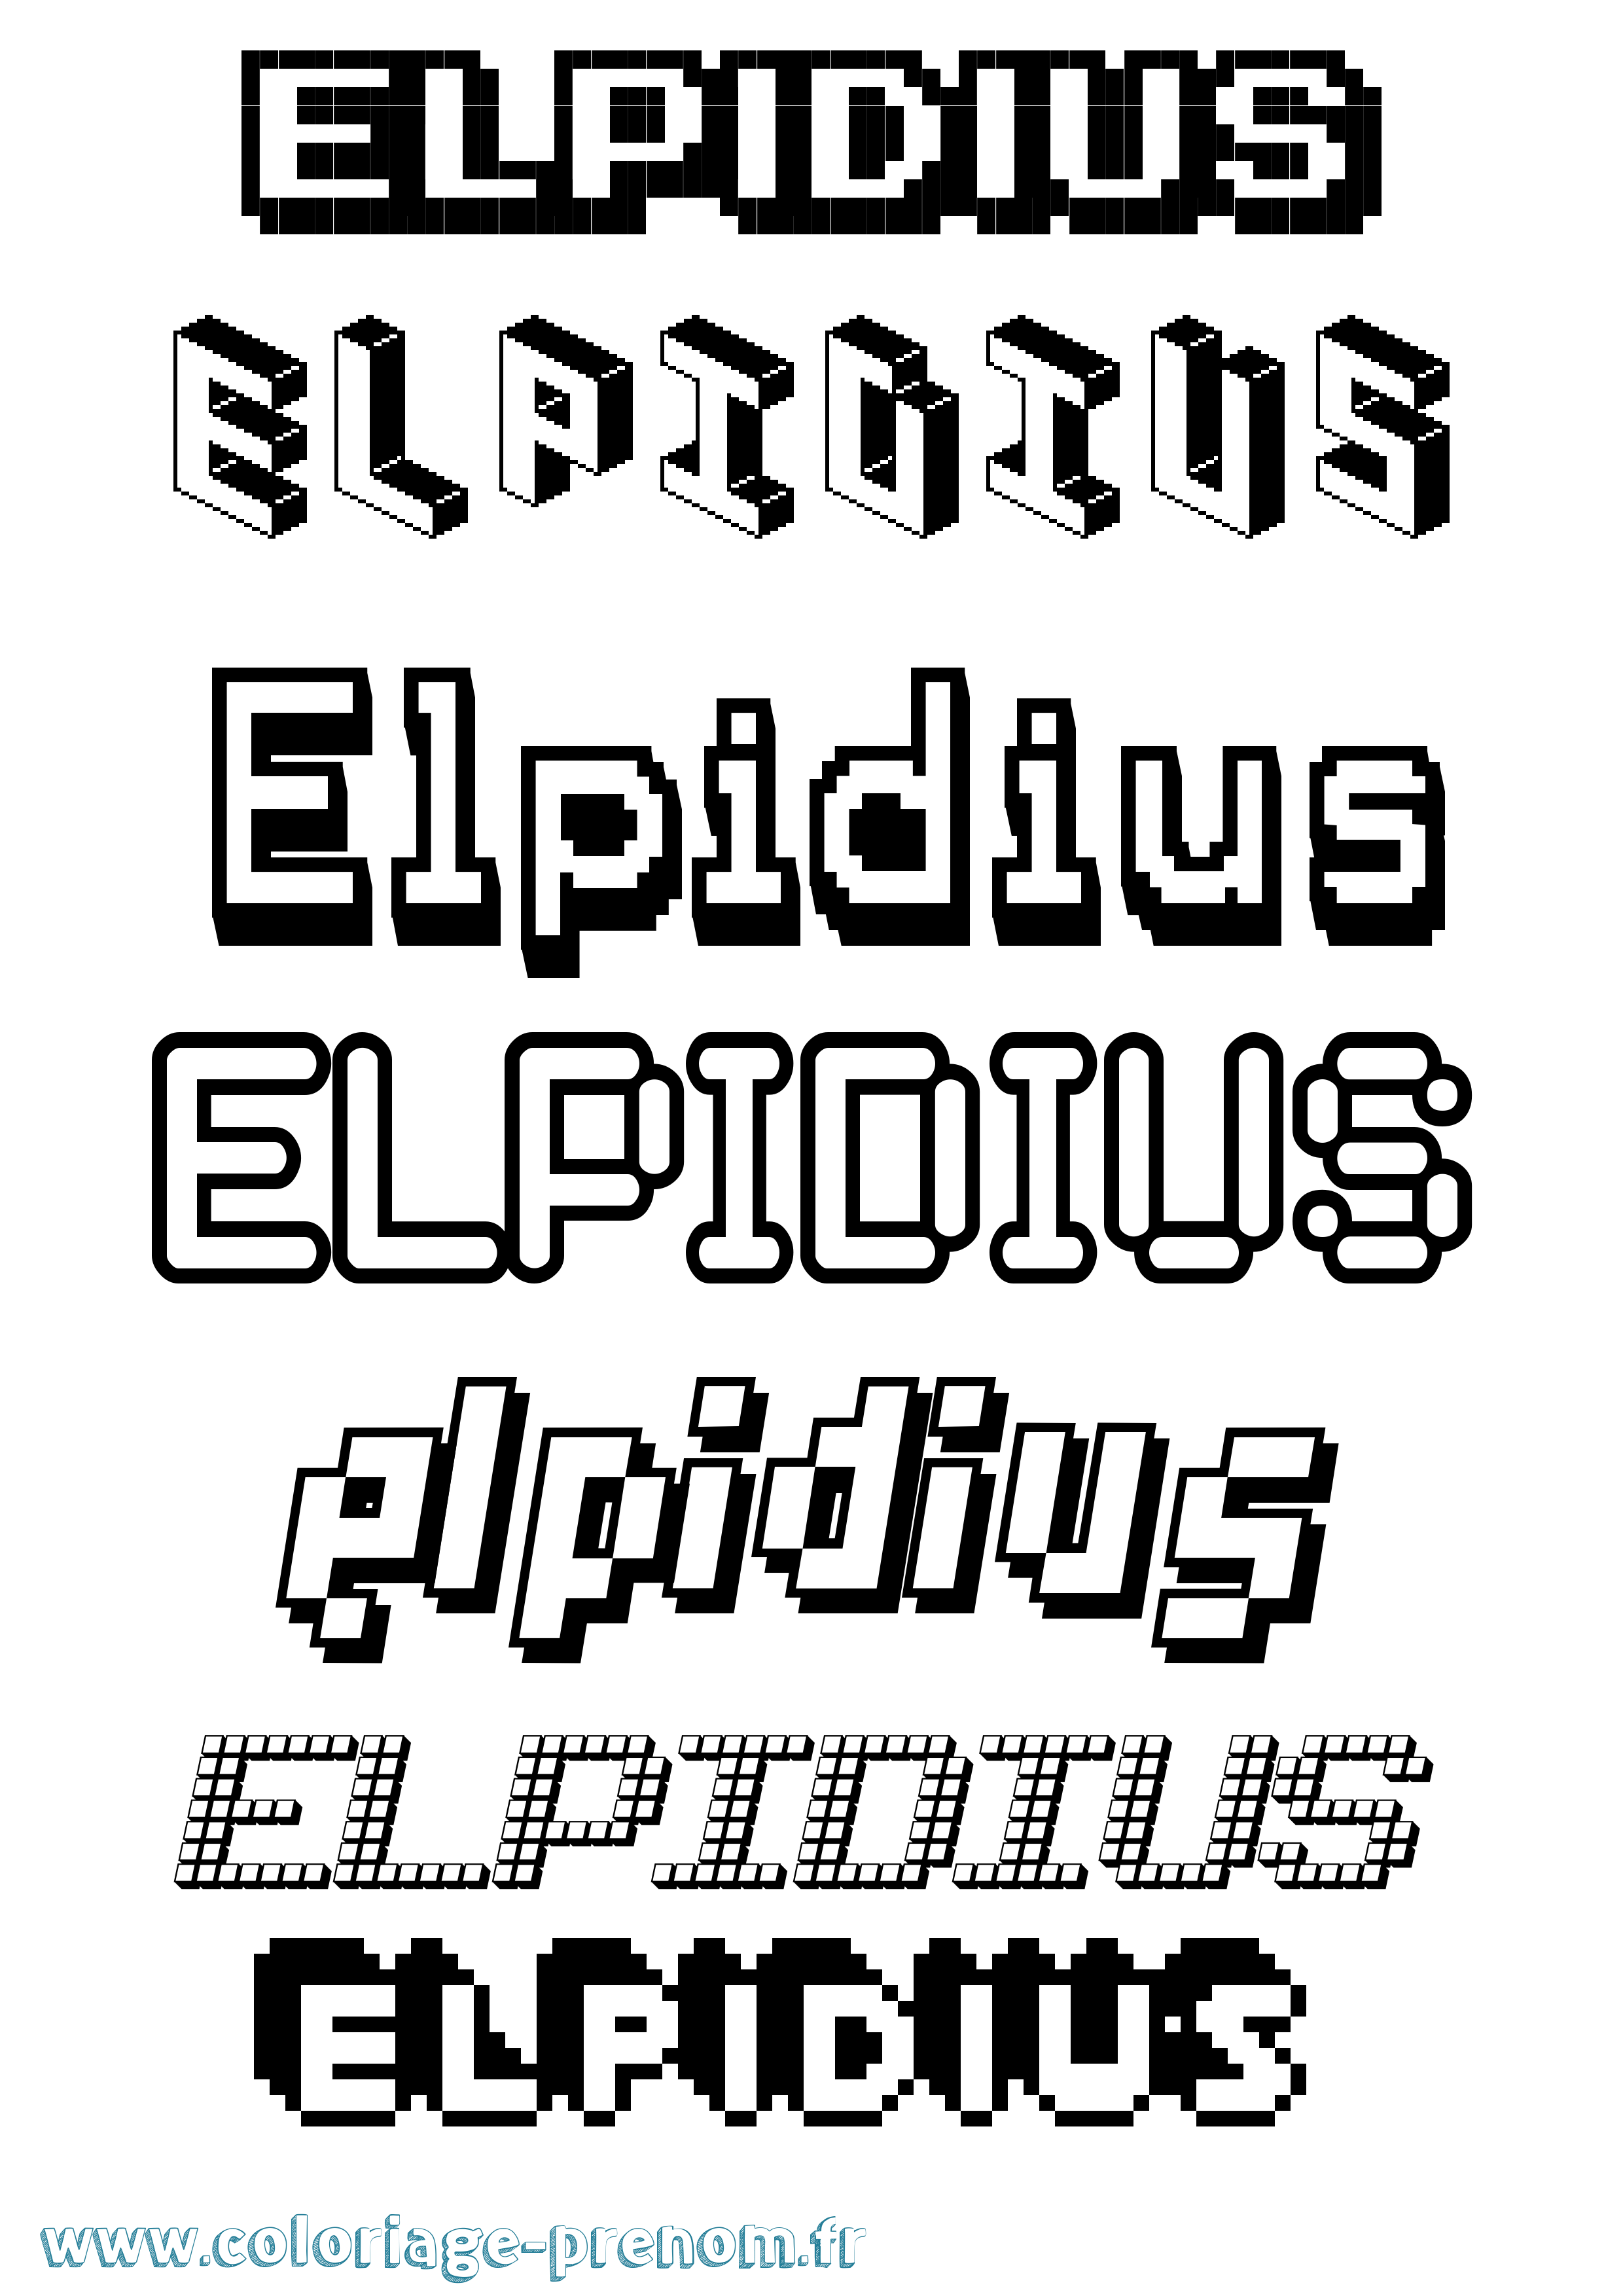 Coloriage prénom Elpidius Pixel